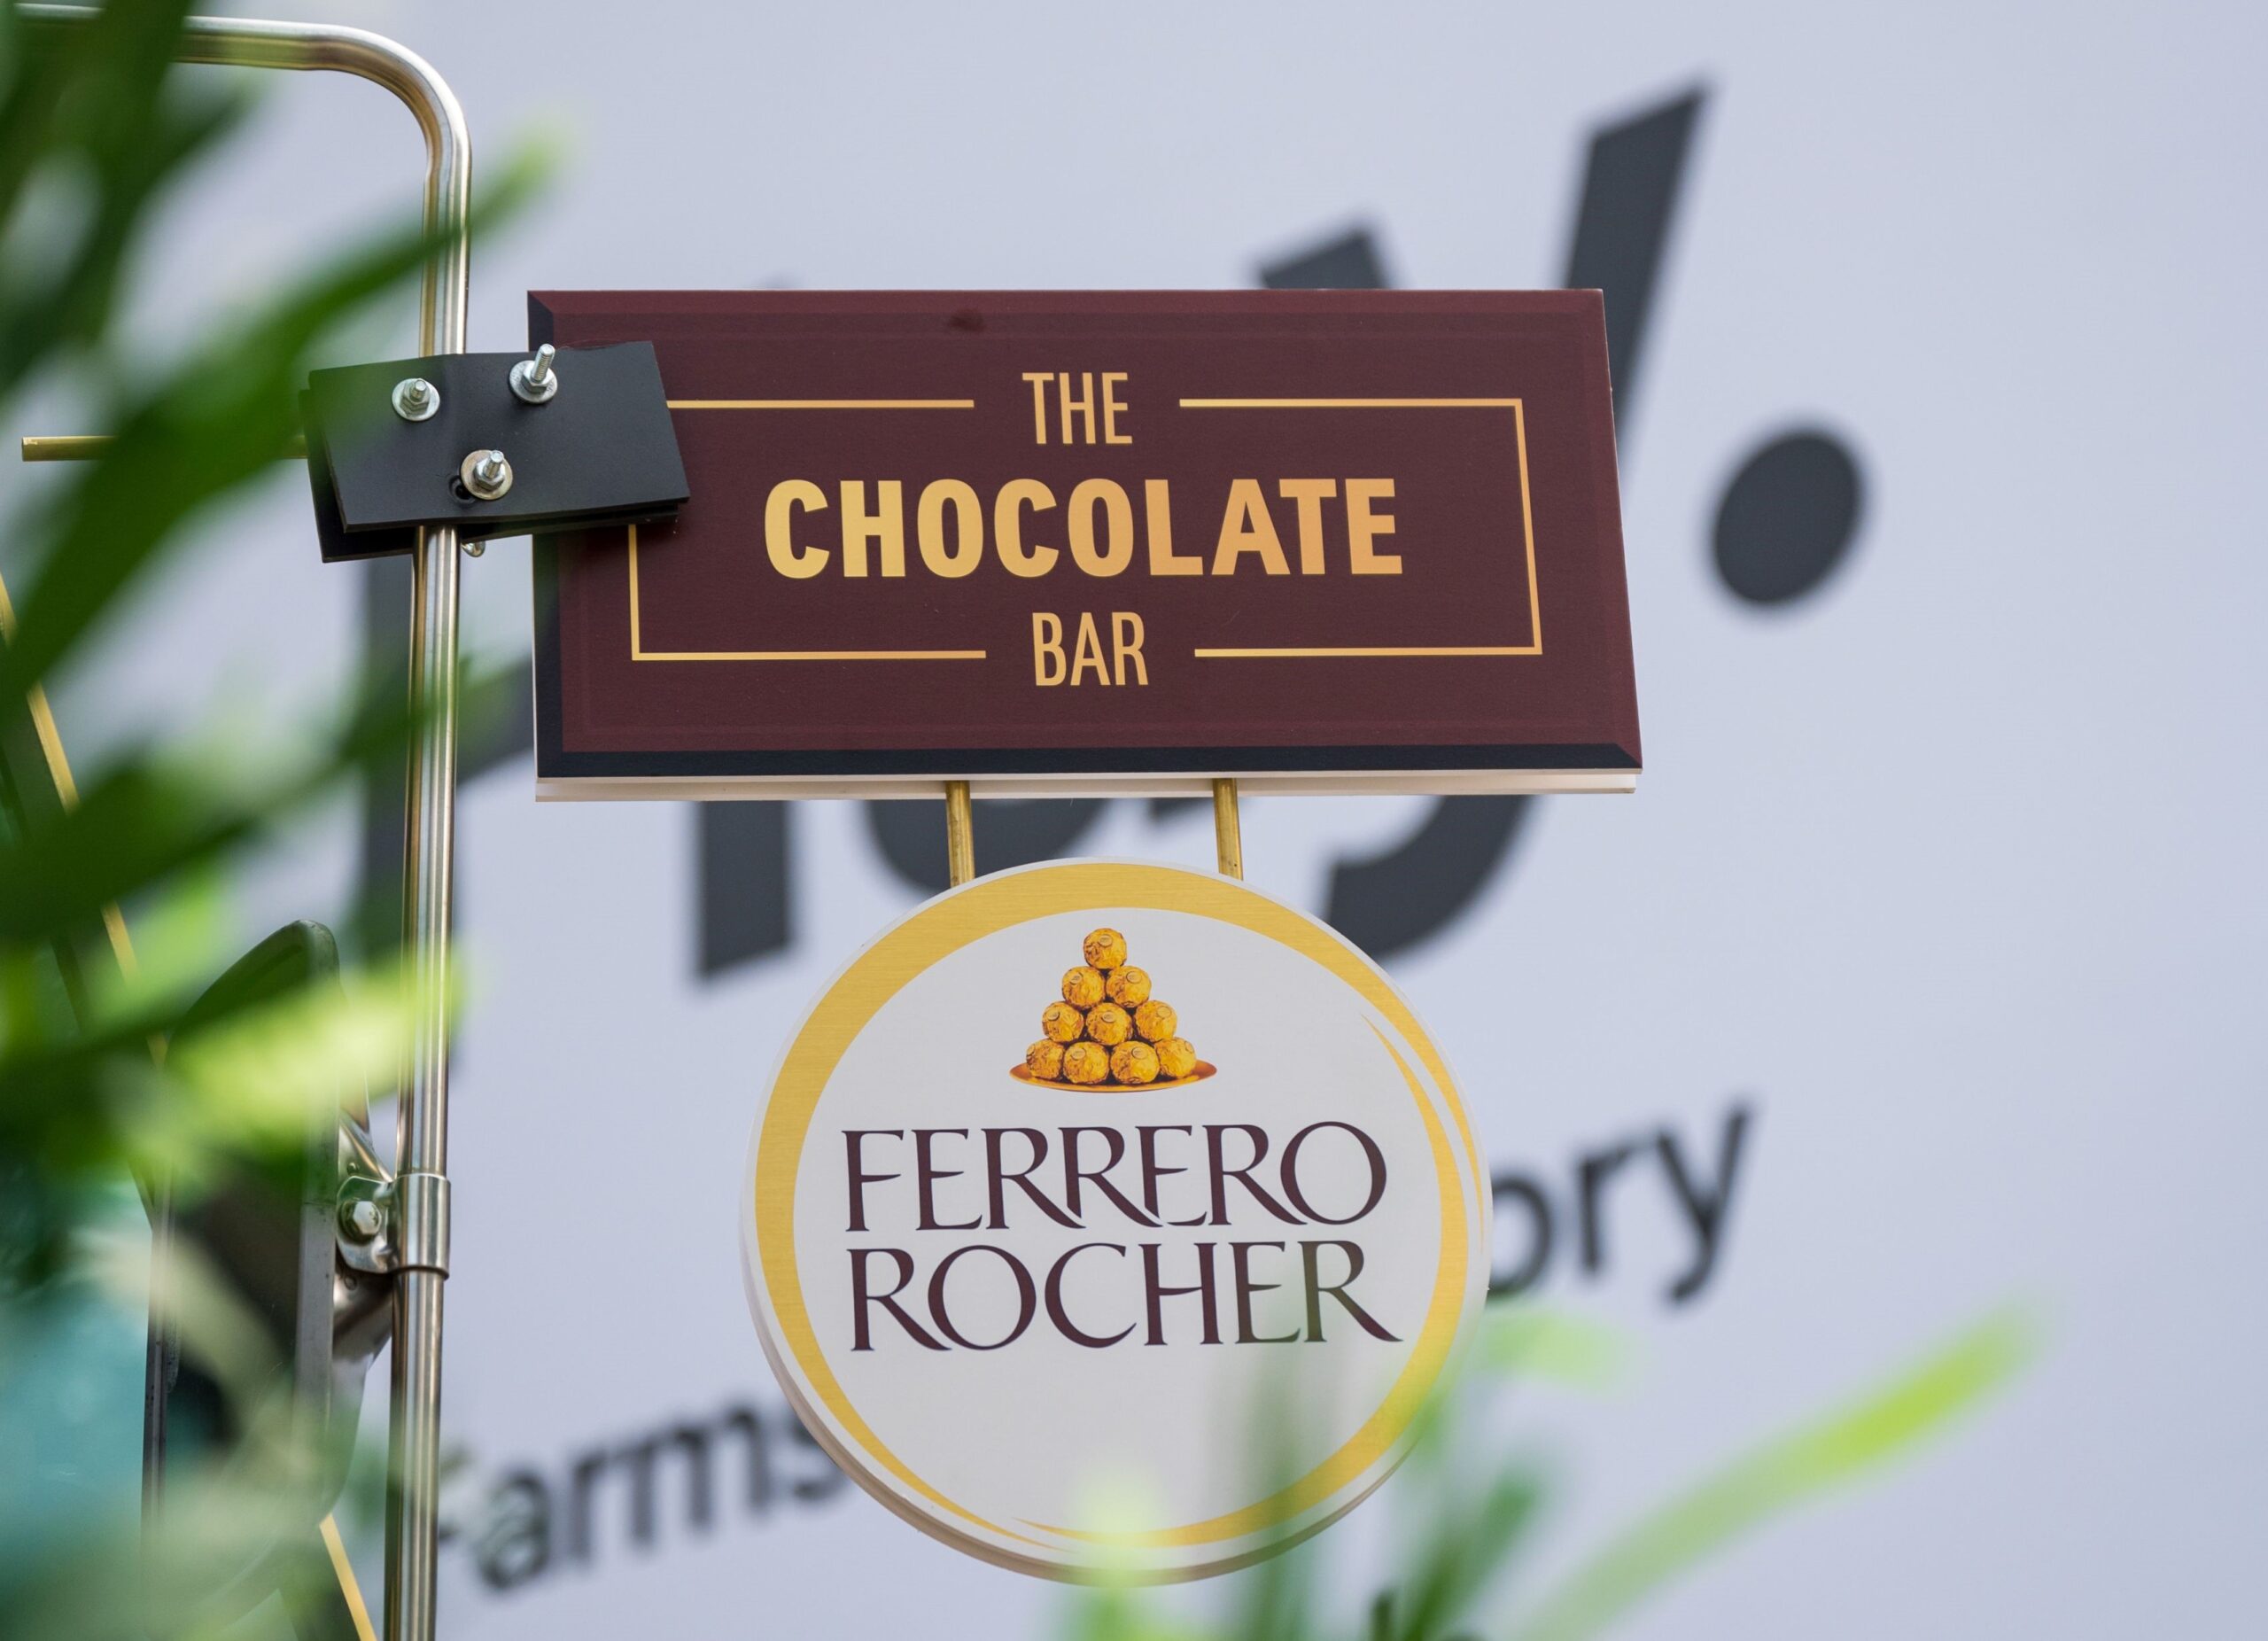 The chocolate bar - Ferrero Rocher